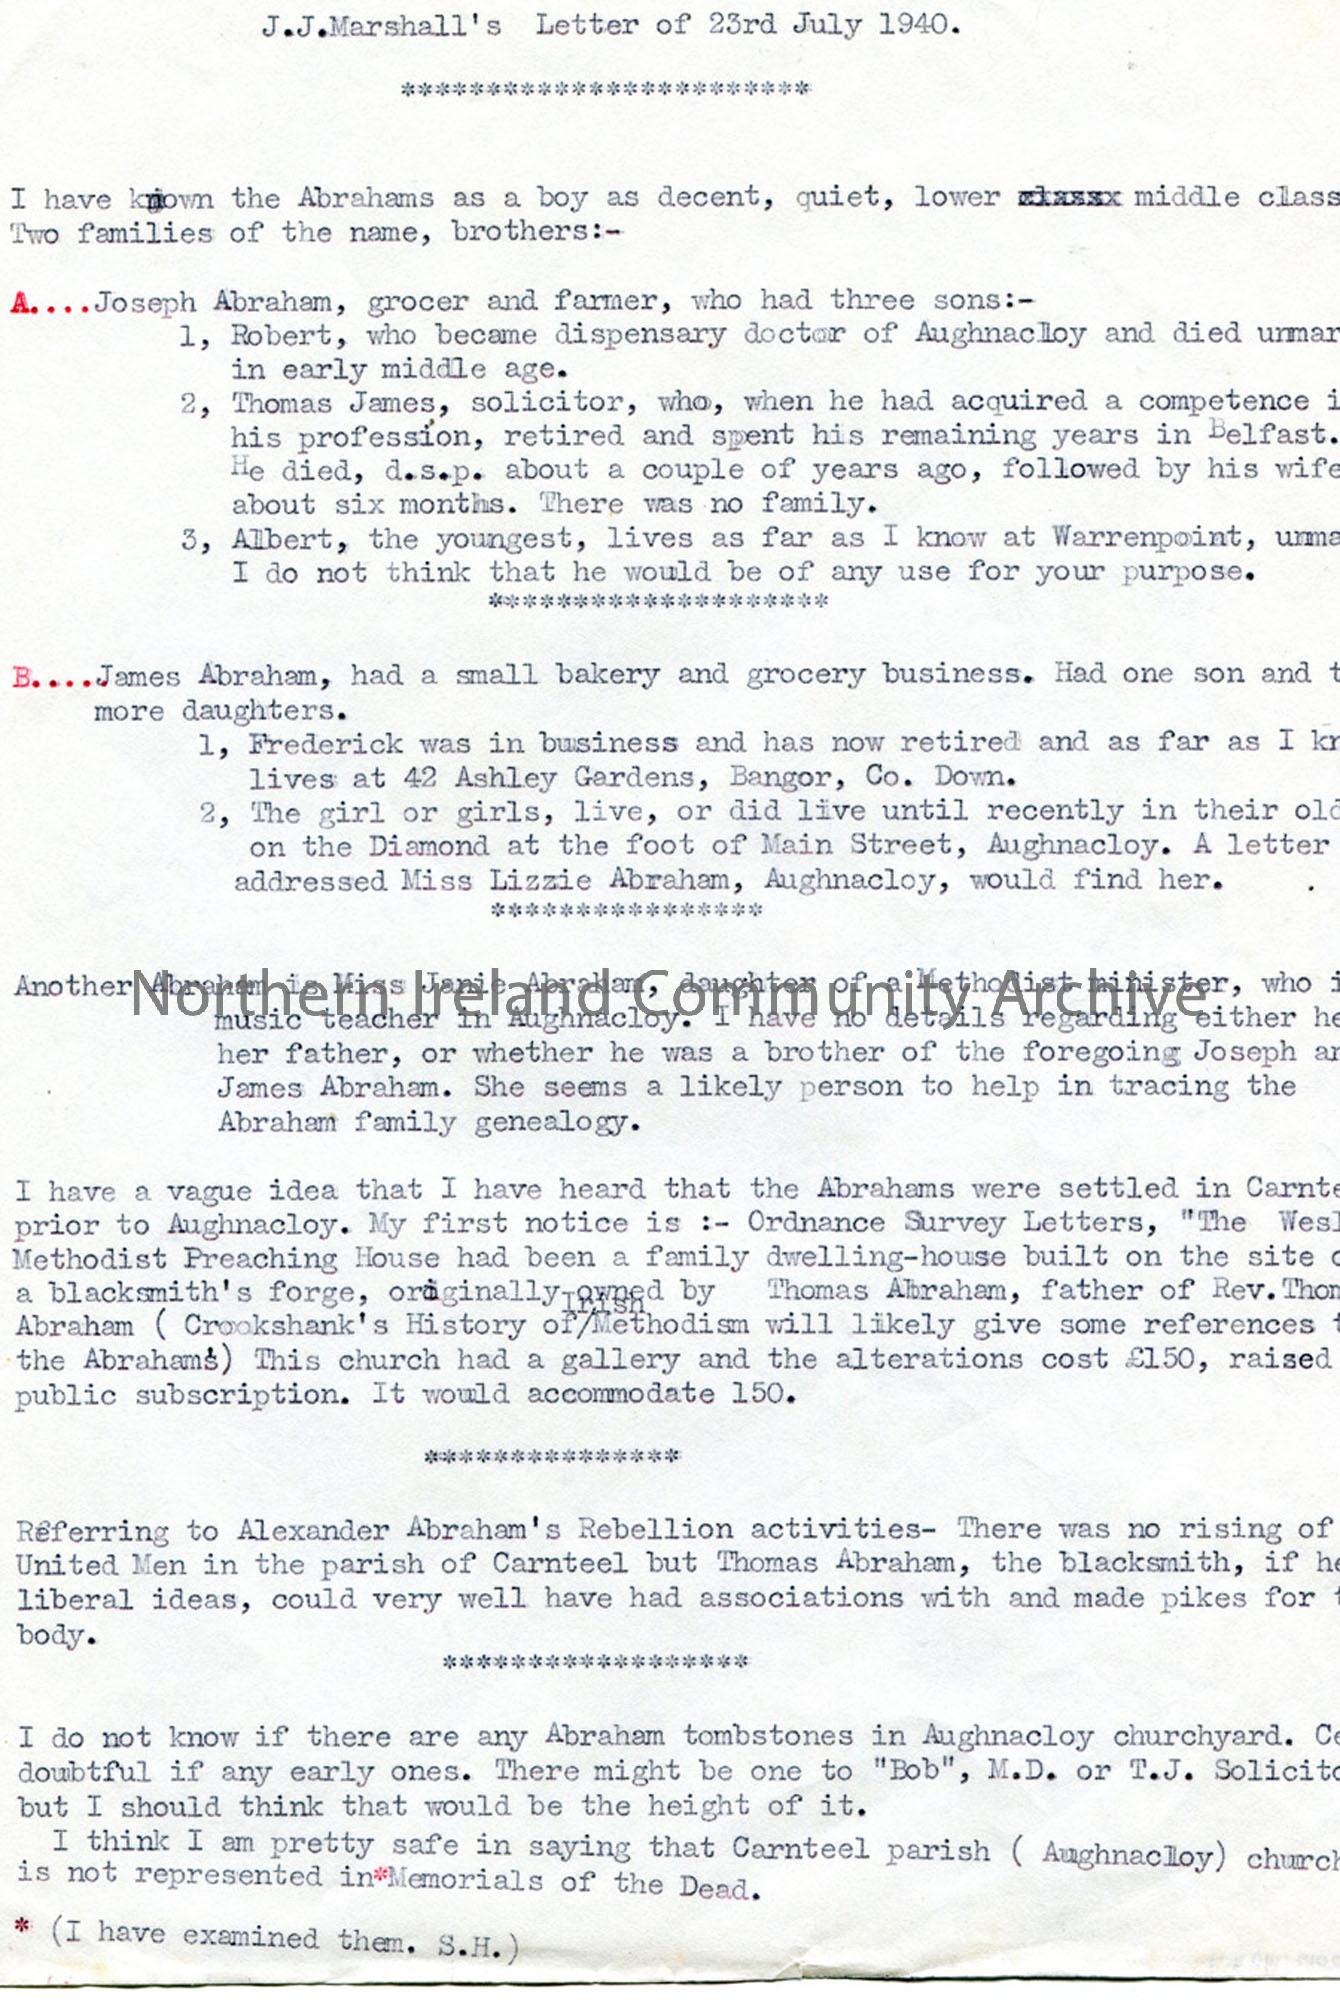 Letter from J. J. Marshall 23.7.1940 (1)